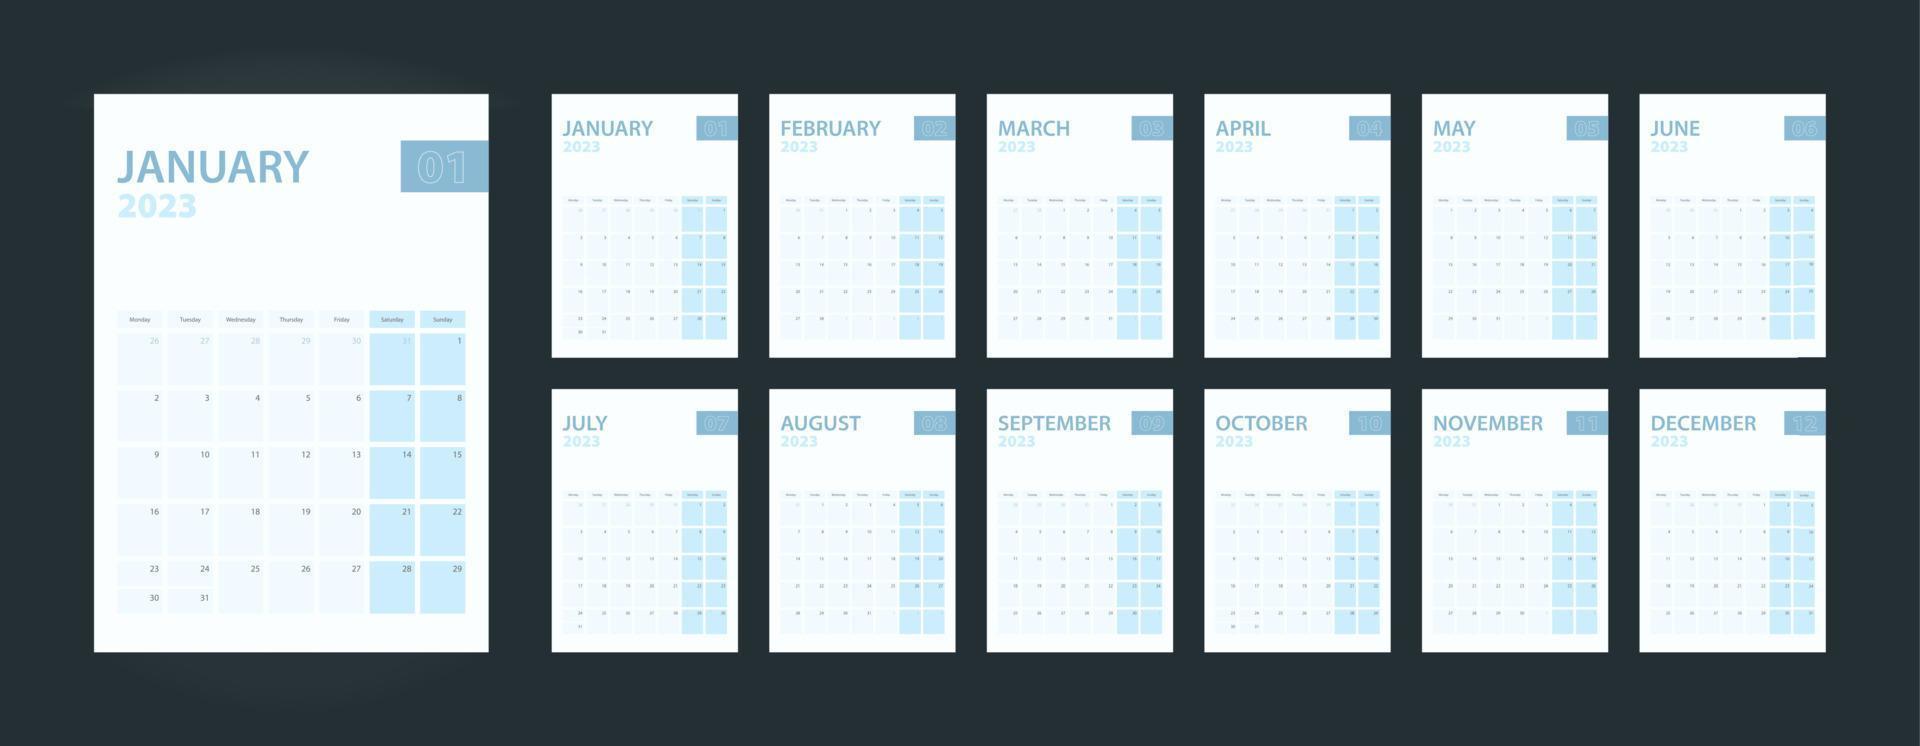 Vertical calendar 2023, set of 12 pages of calendar 2023. vector